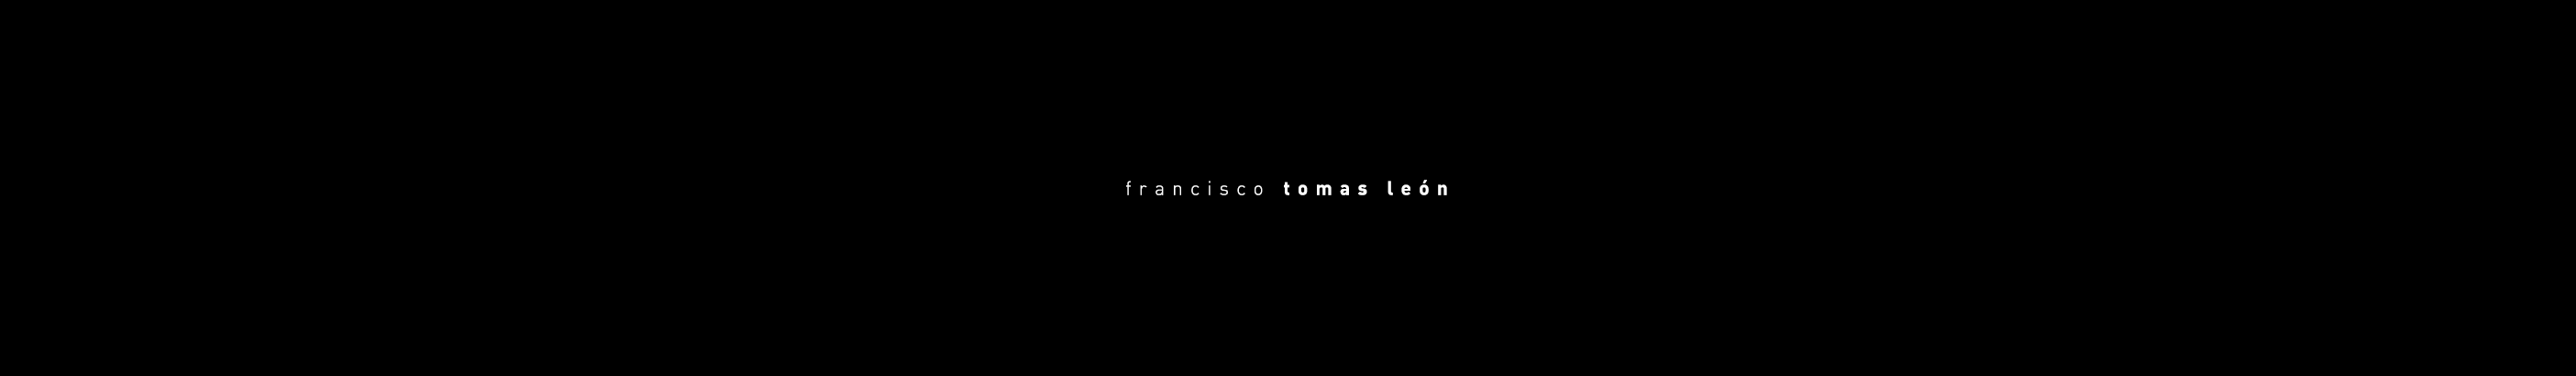 Francisco Tomas Leon's profile banner